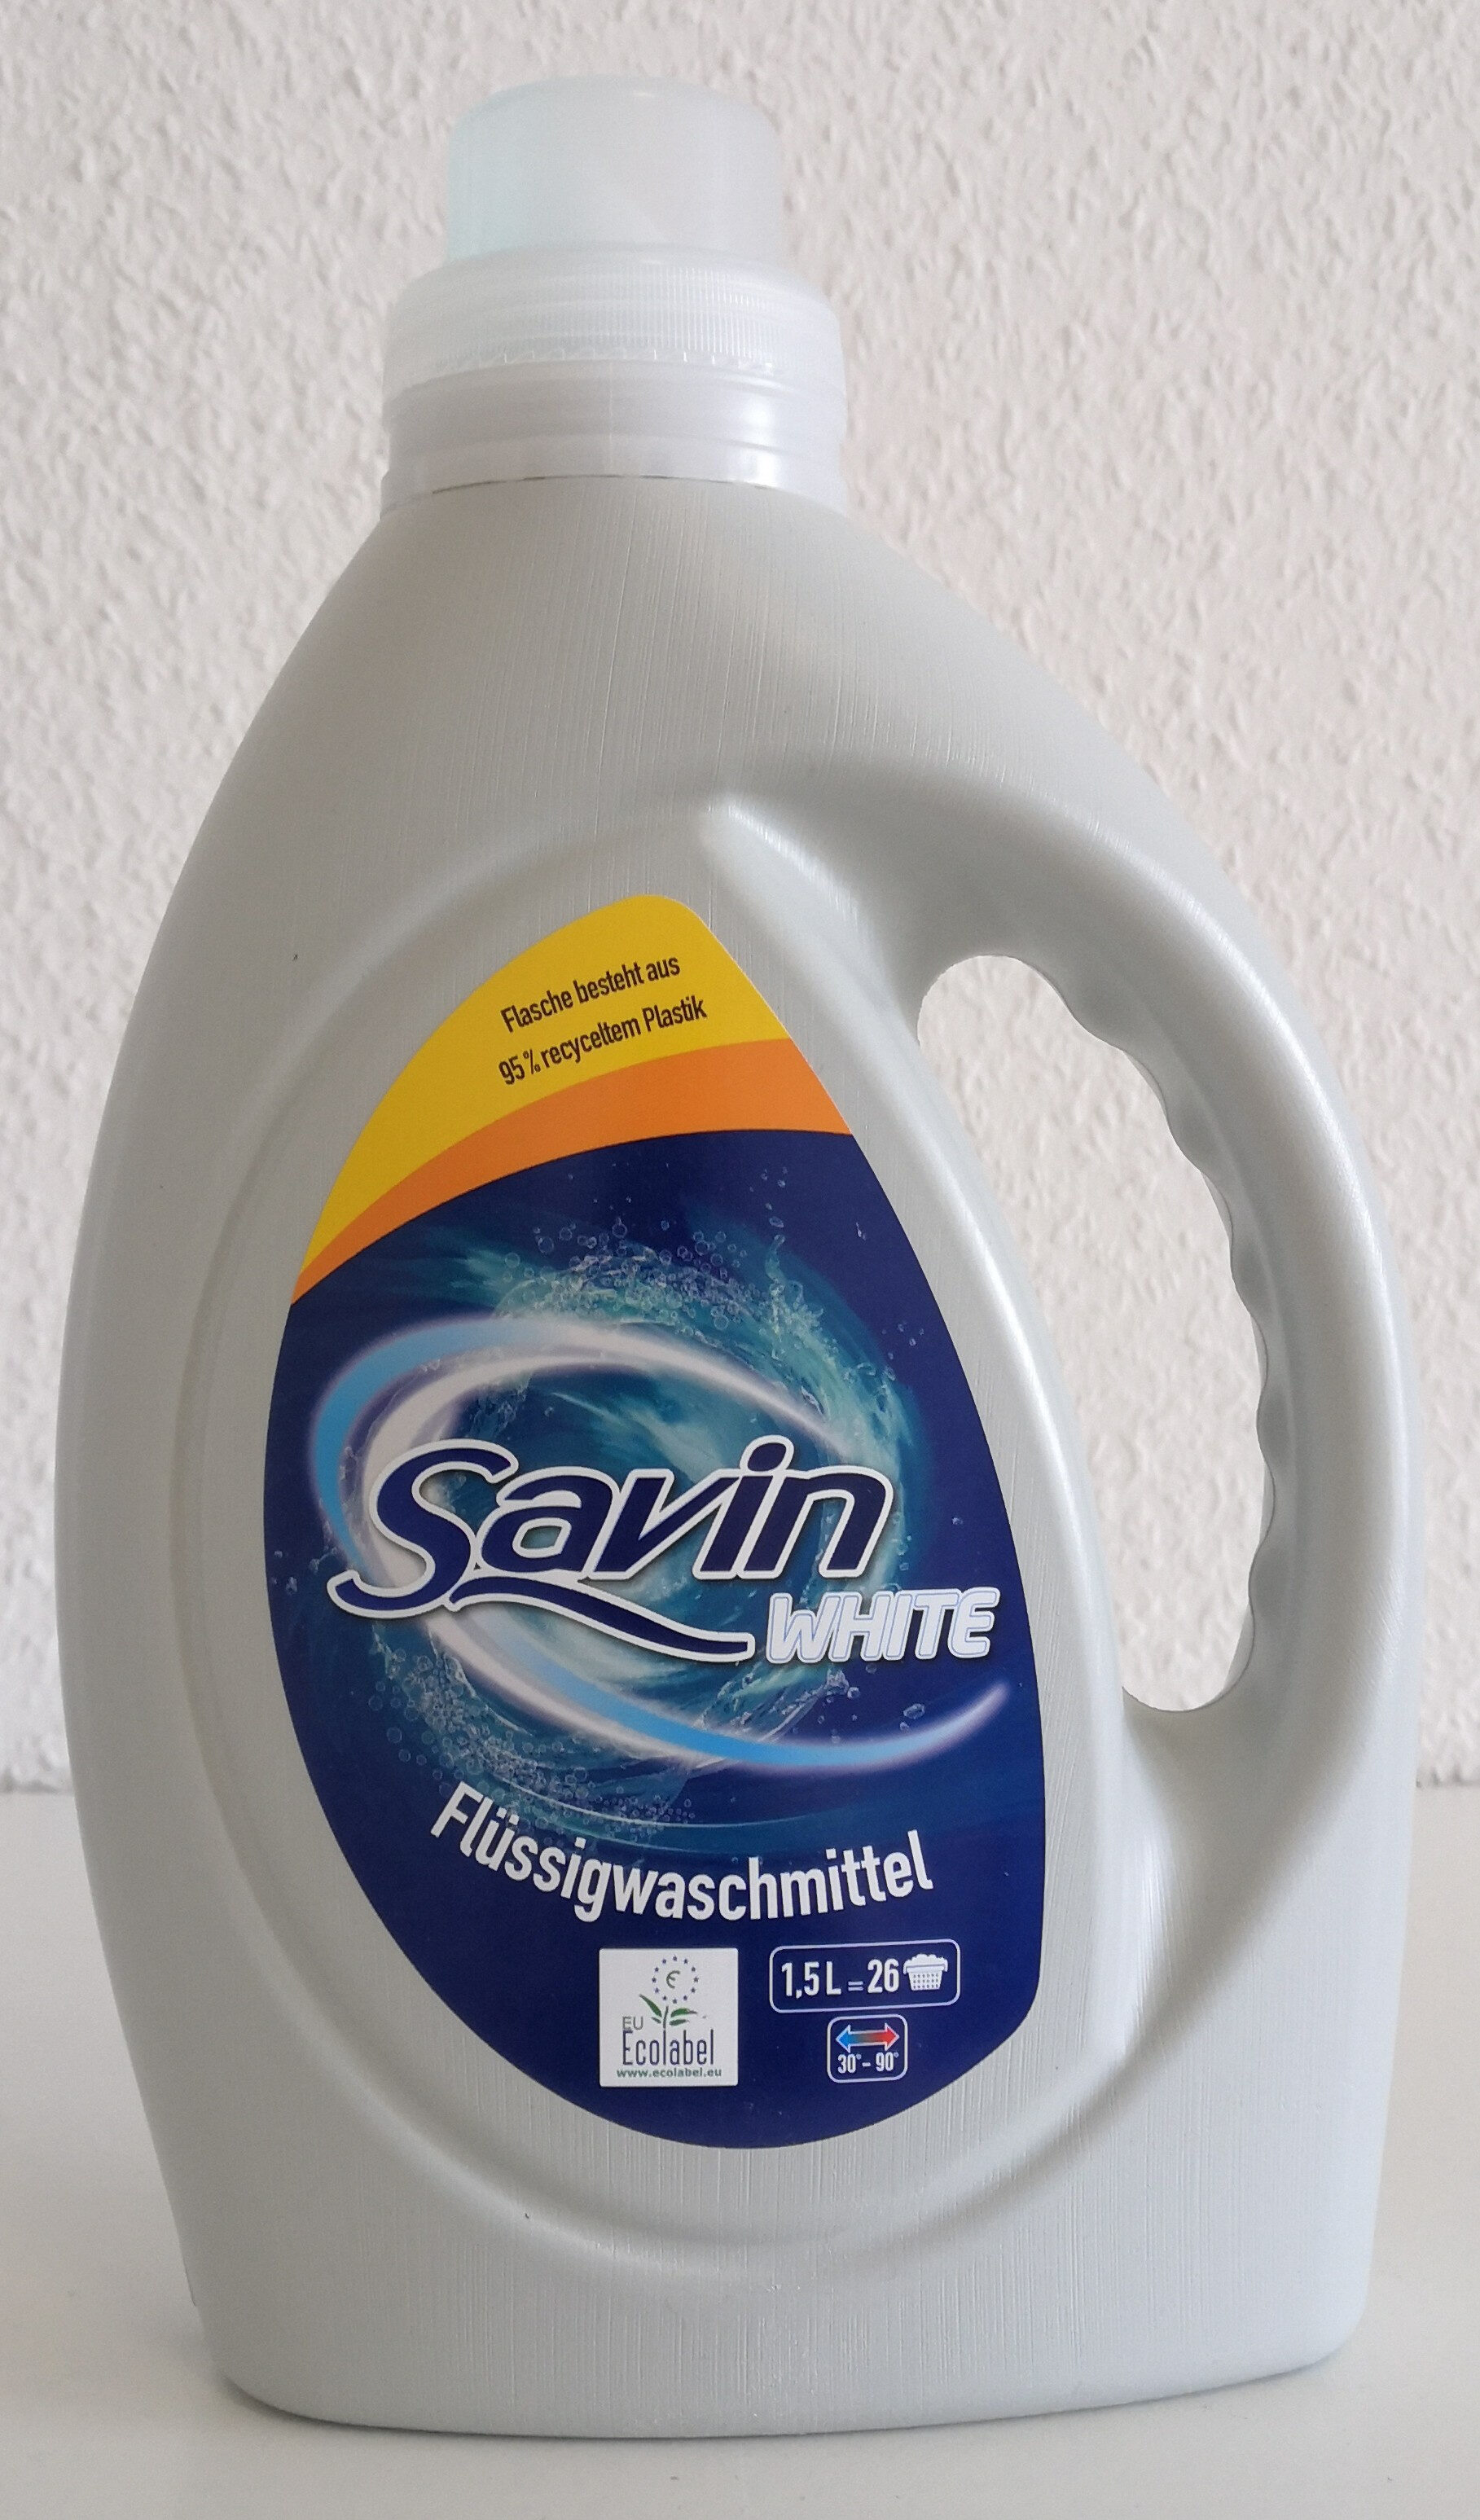 Savin White - Product - de